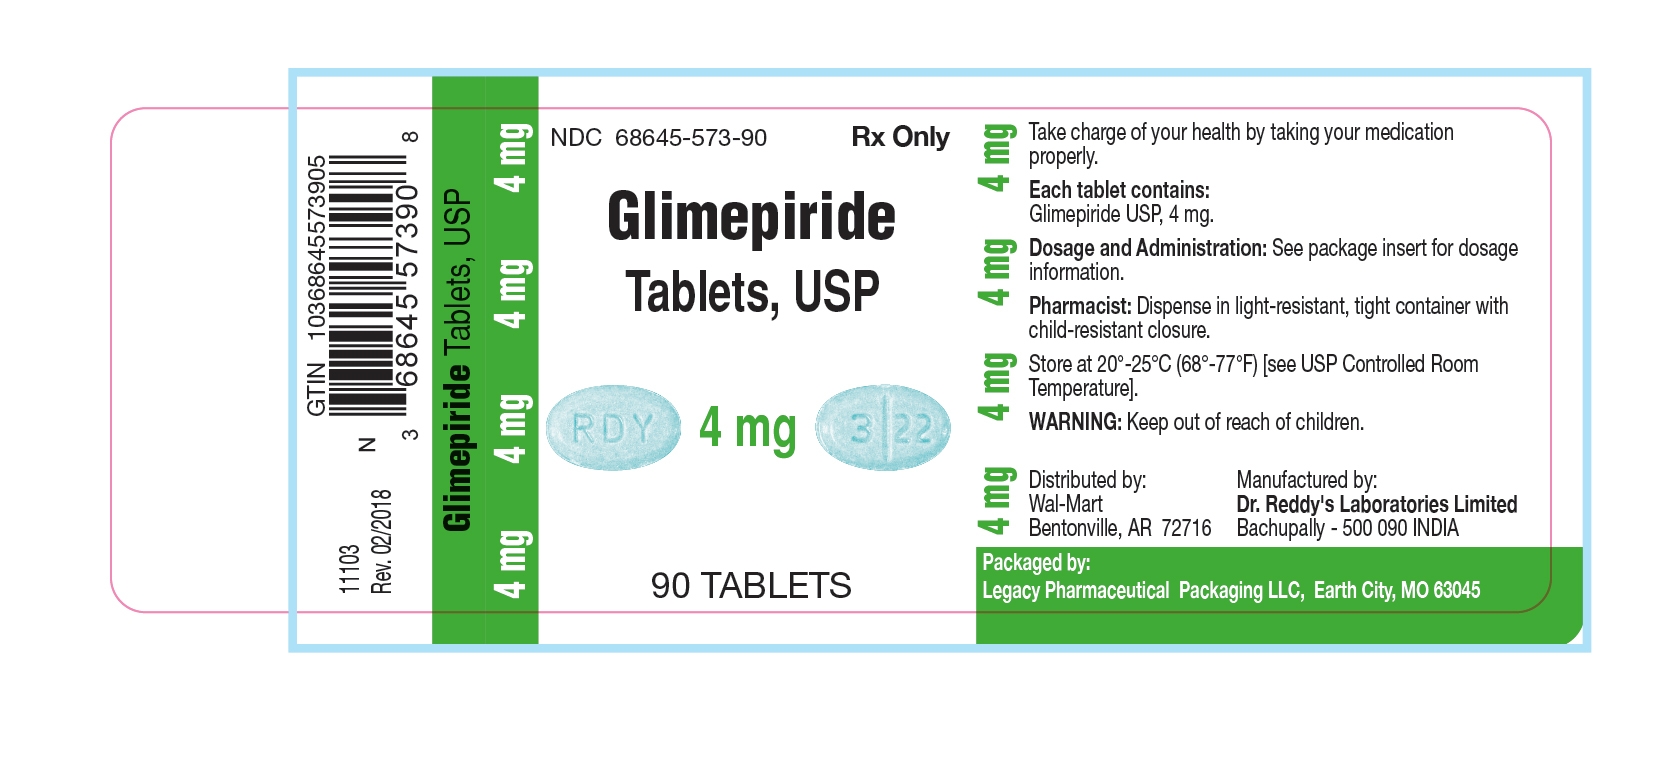 Glimepiride Tablets, USP 4 mg